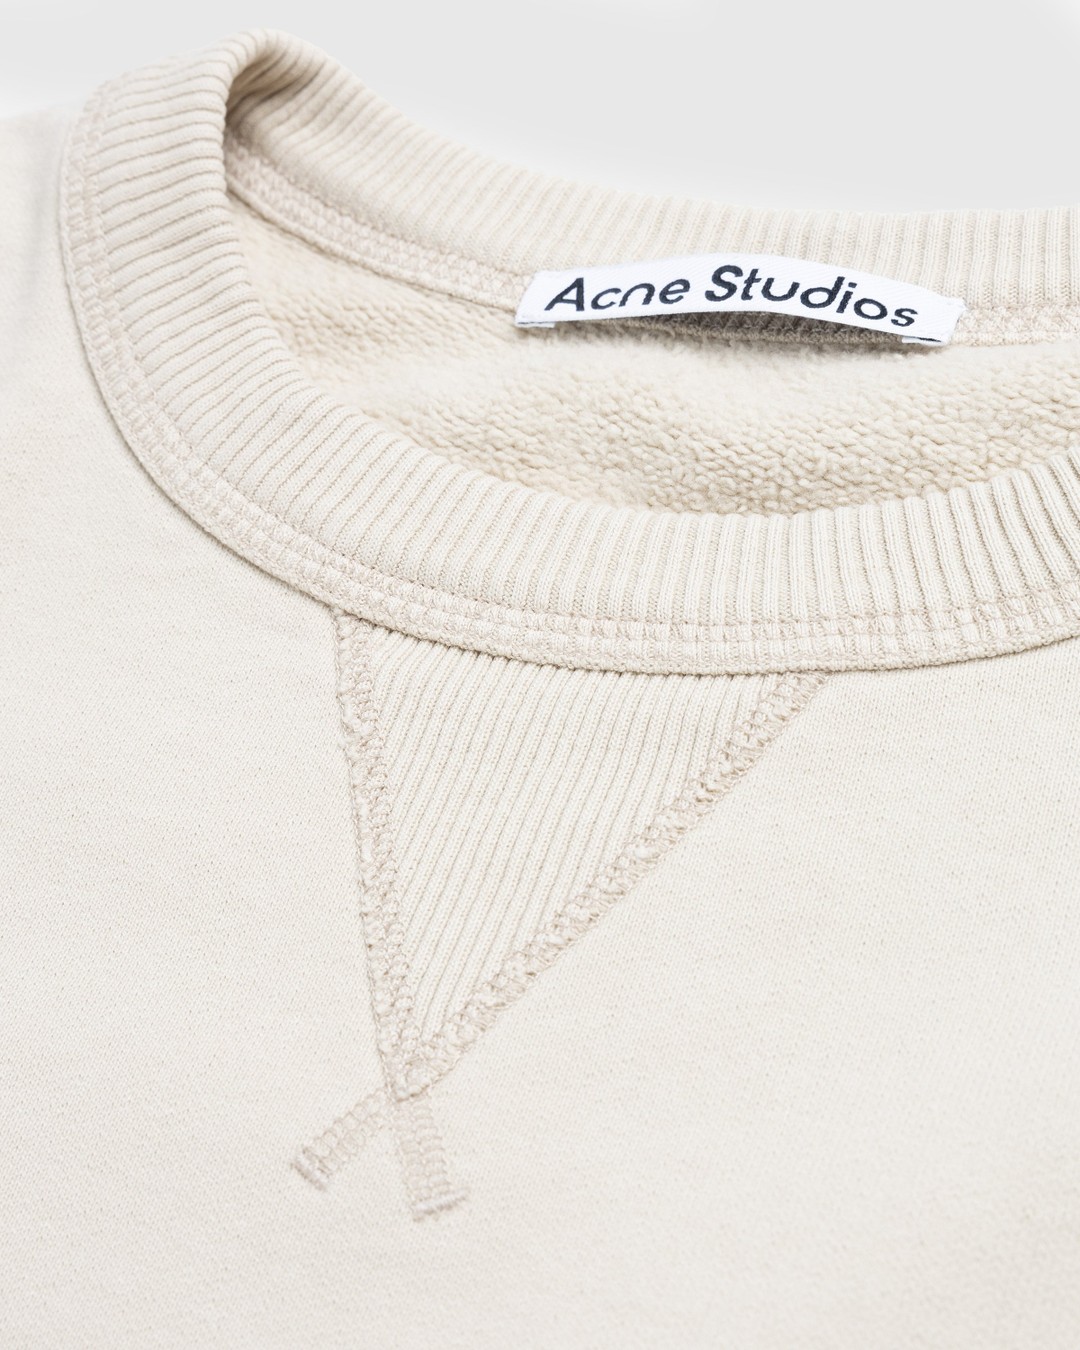 Acne Studios – Stamp Logo Sweater Champagne Beige - Sweats - Beige - Image 5